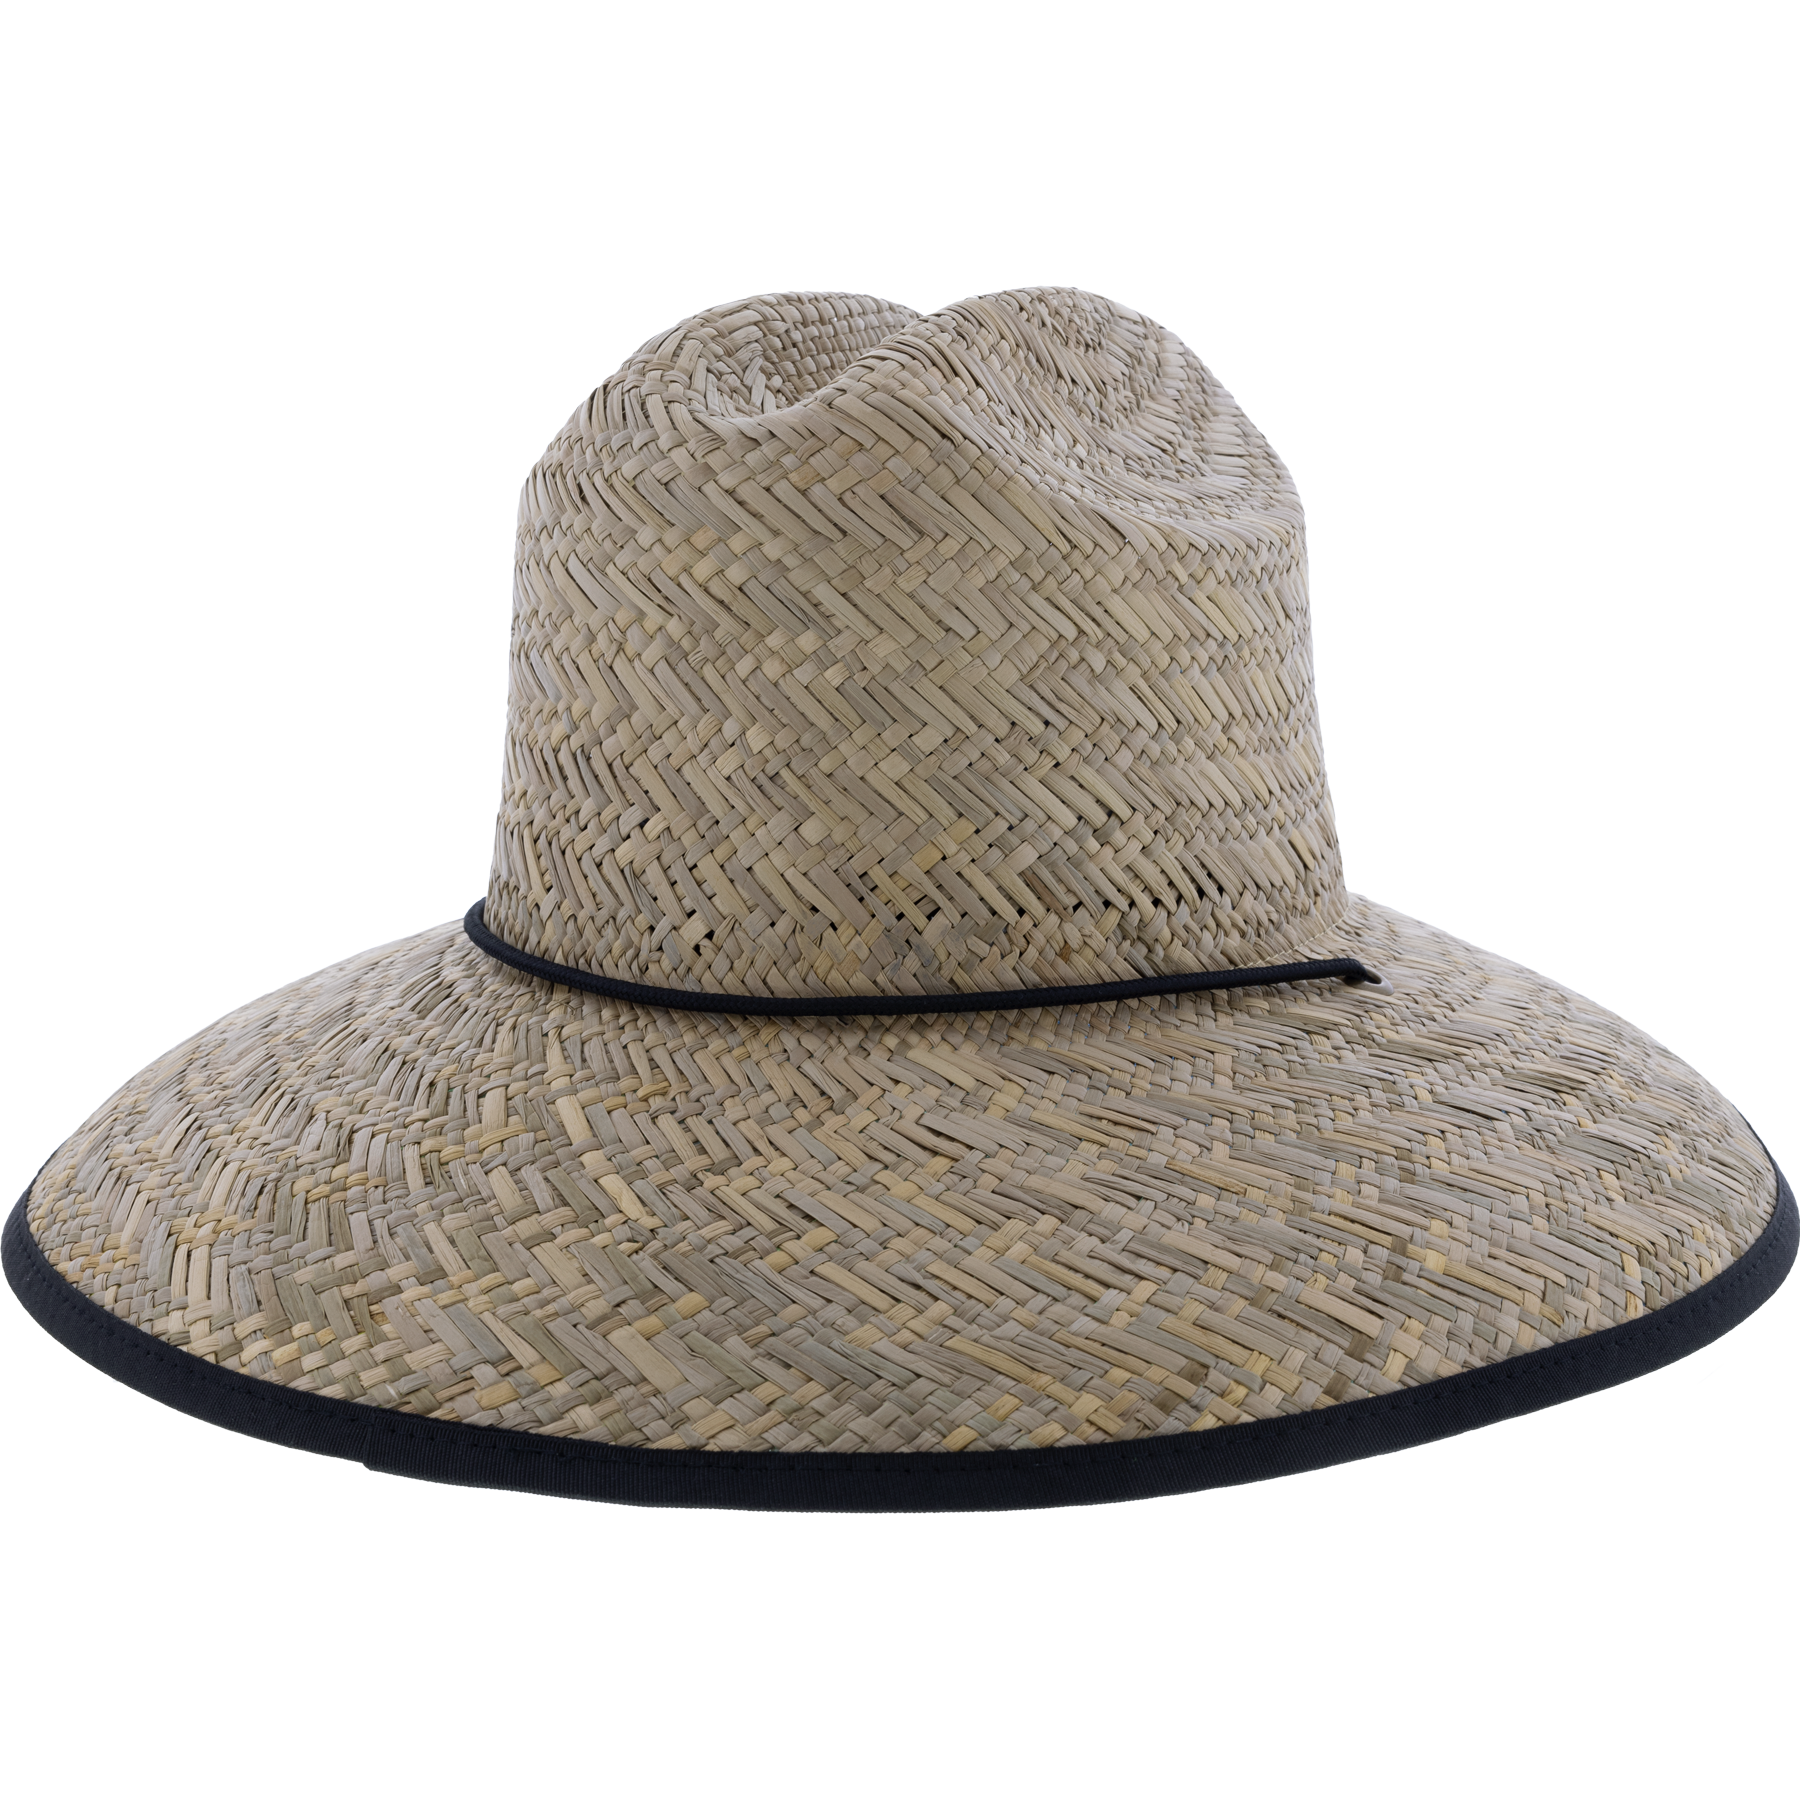 FXR Shoreside YOUTH Straw Hat Grey Ripple